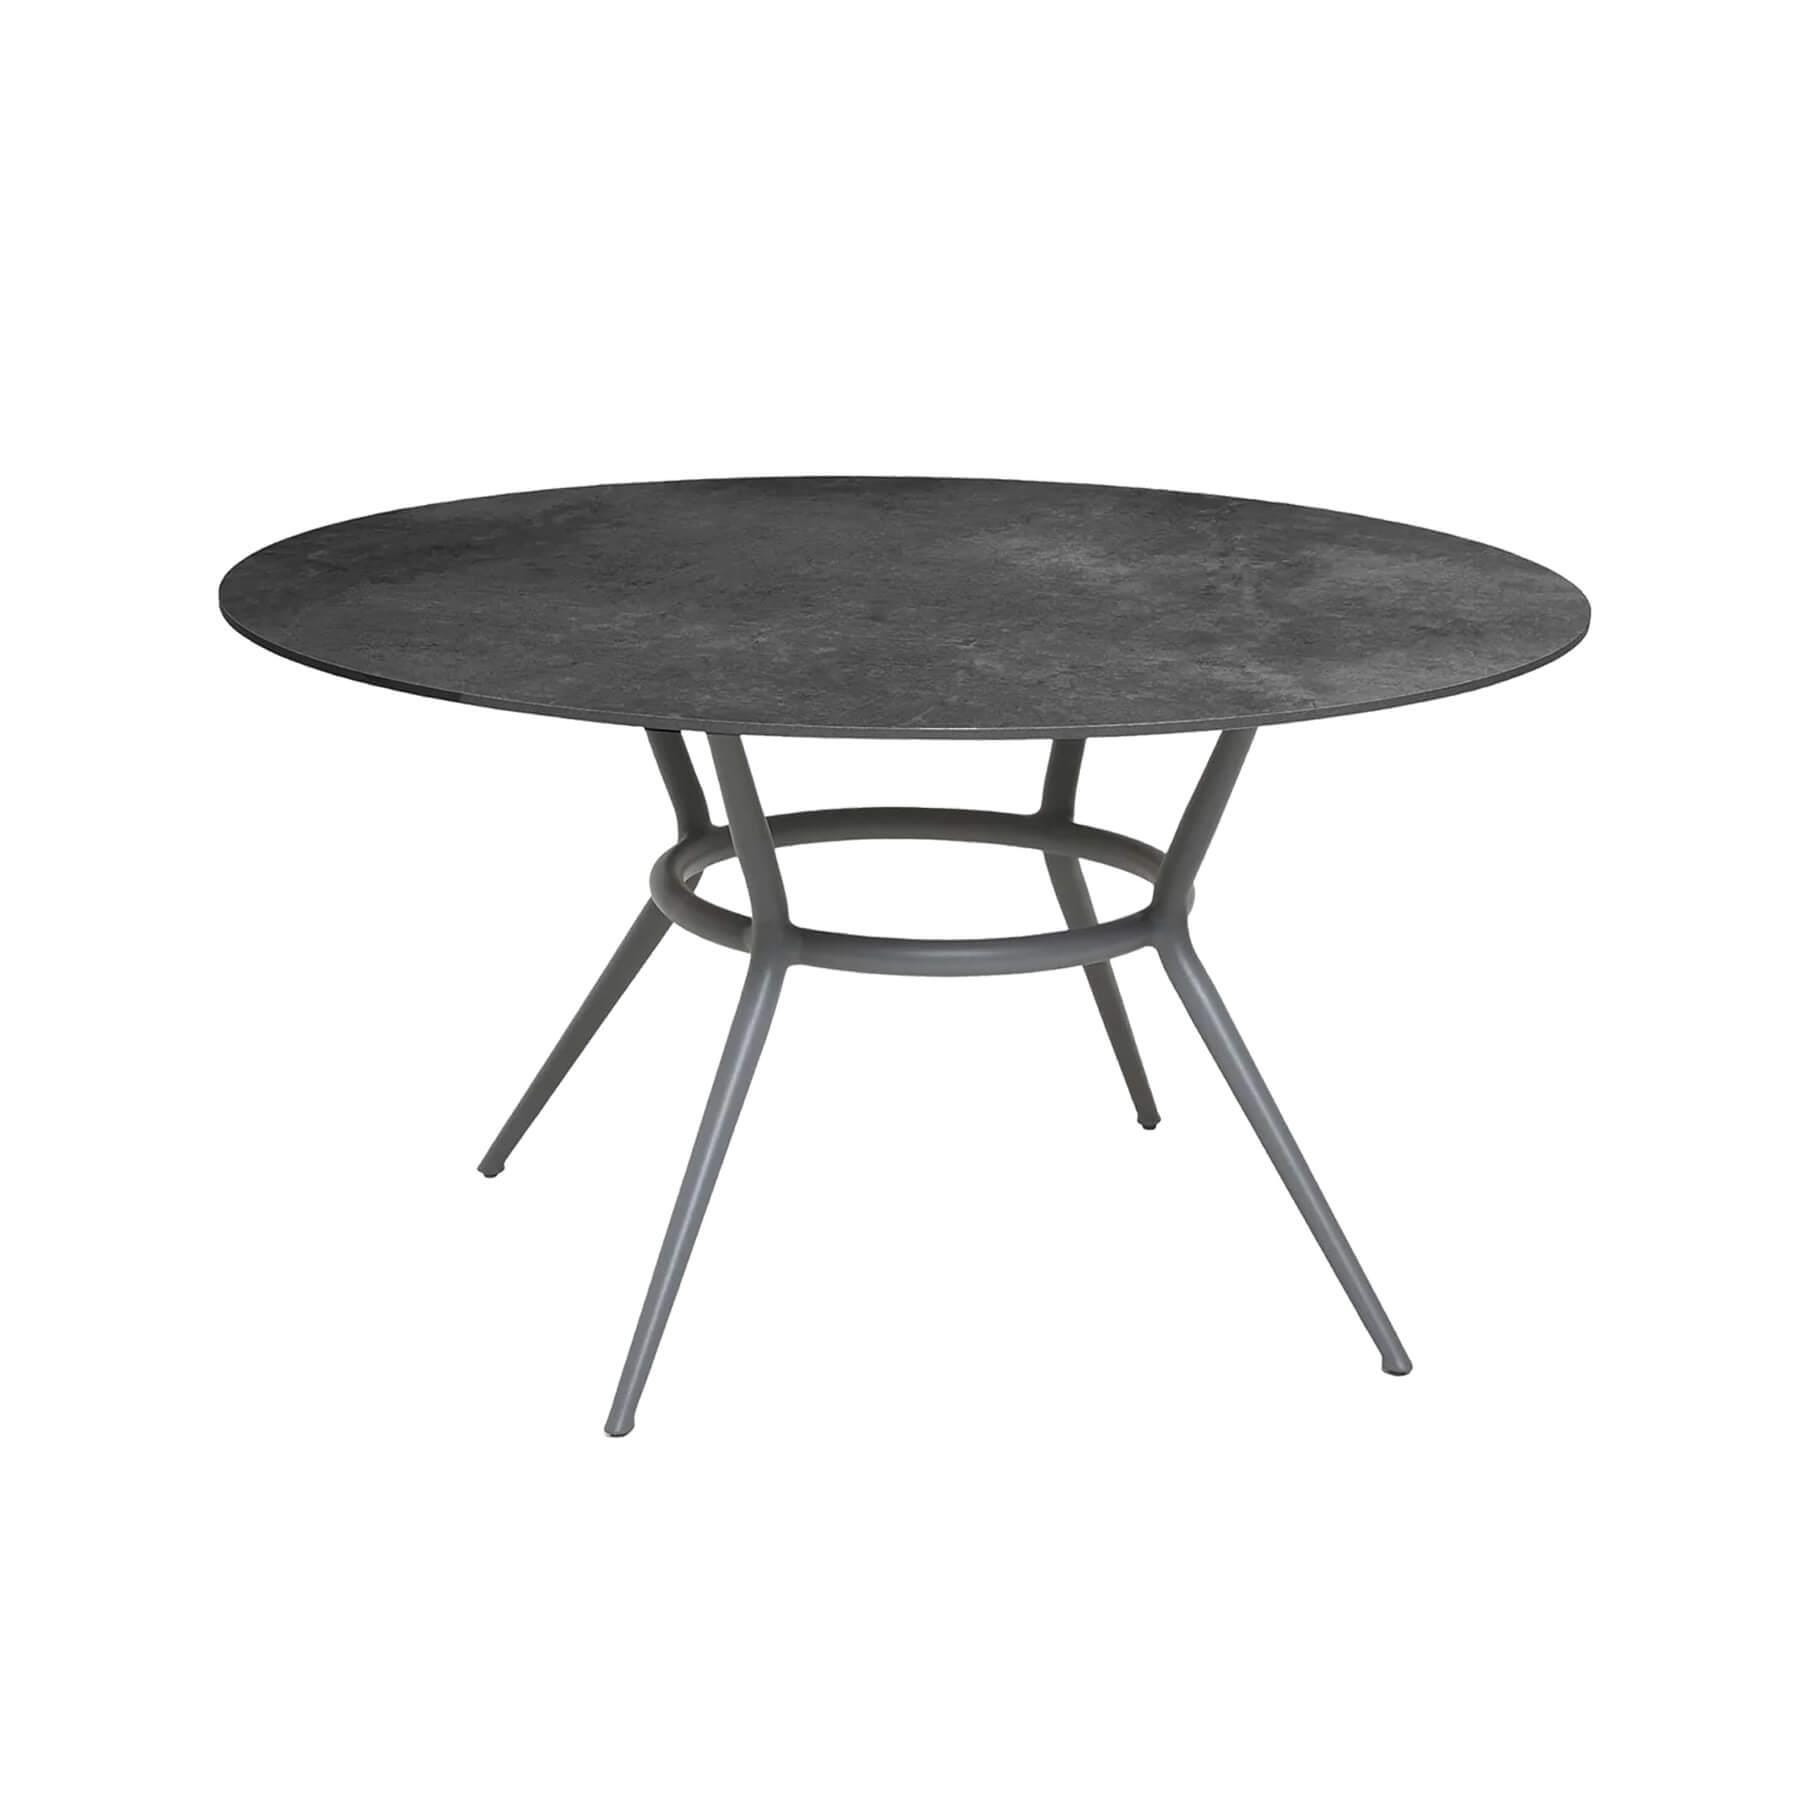 Caneline Joy Outdoor Dining Table Round Ceramic Fossil Black Top Light Grey Legs